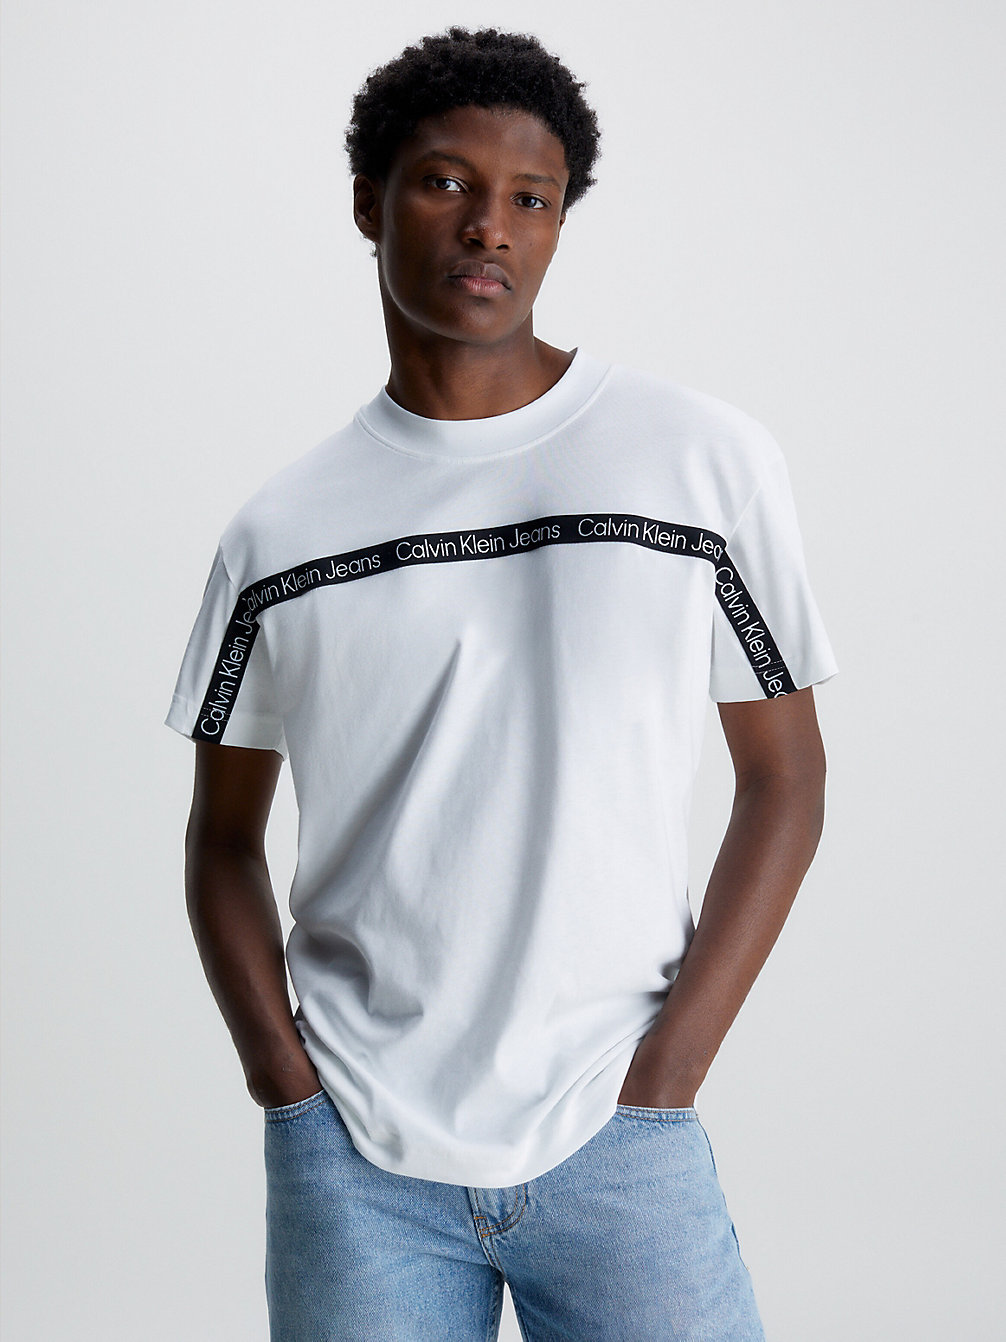 Men's T-shirts Black, White  More Calvin Klein®